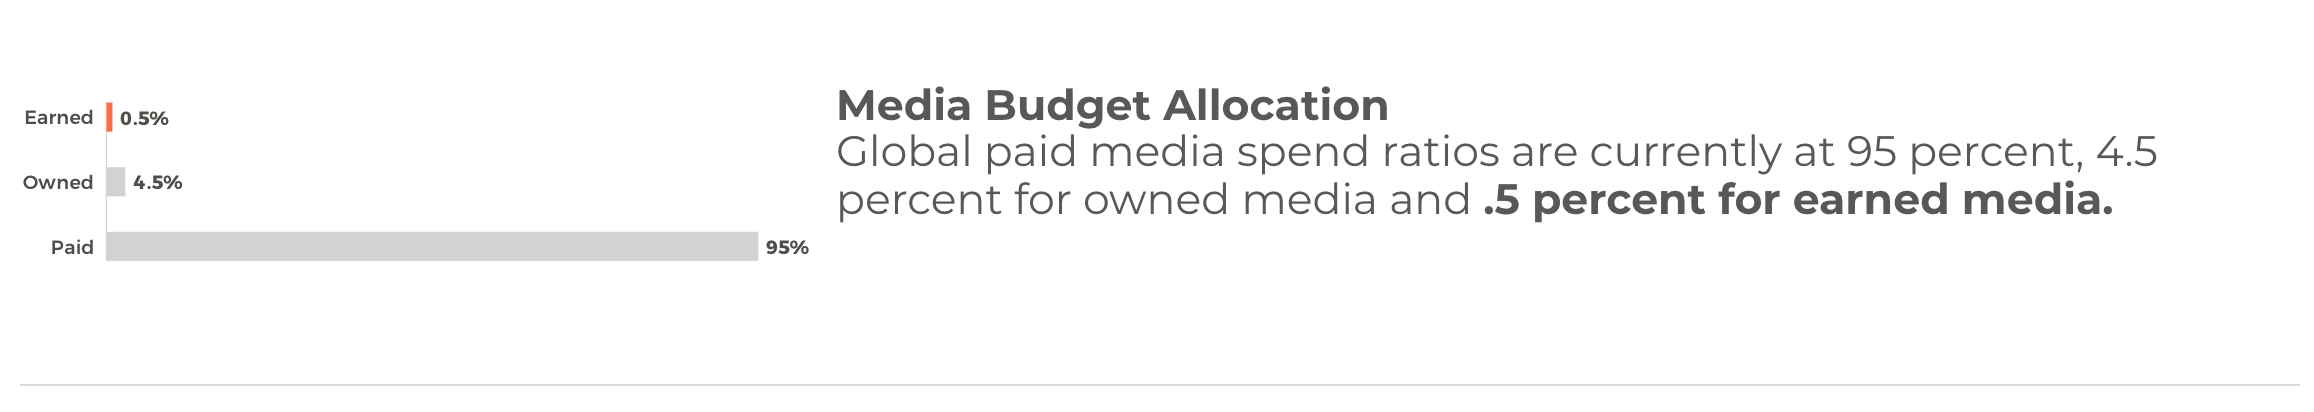 Media Budget Allocation